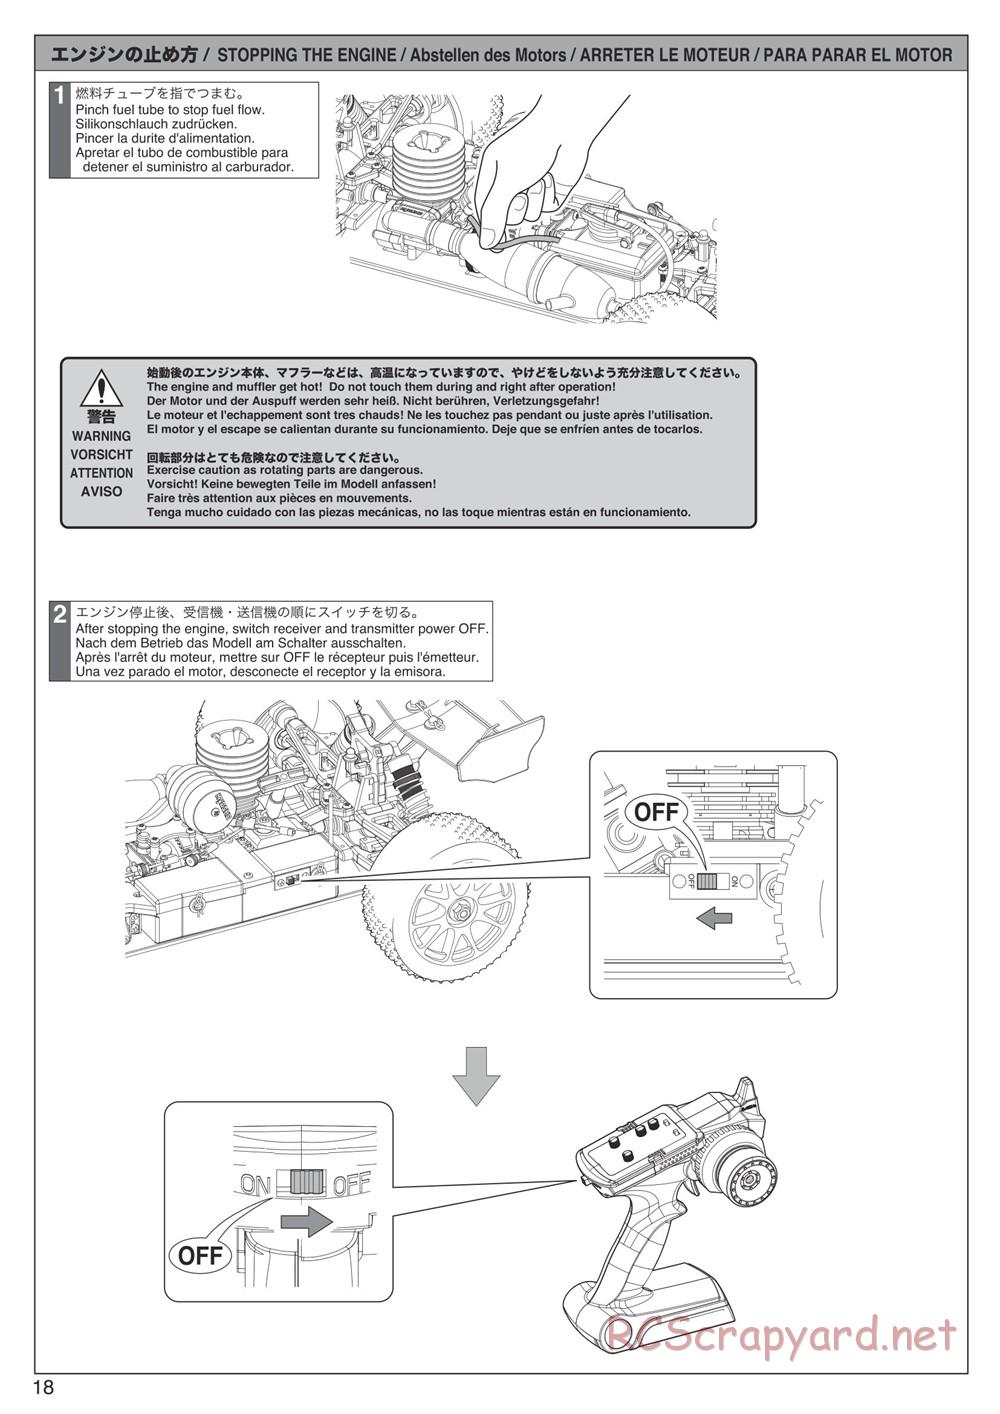 Kyosho - DBX 2.0 - Manual - Page 18